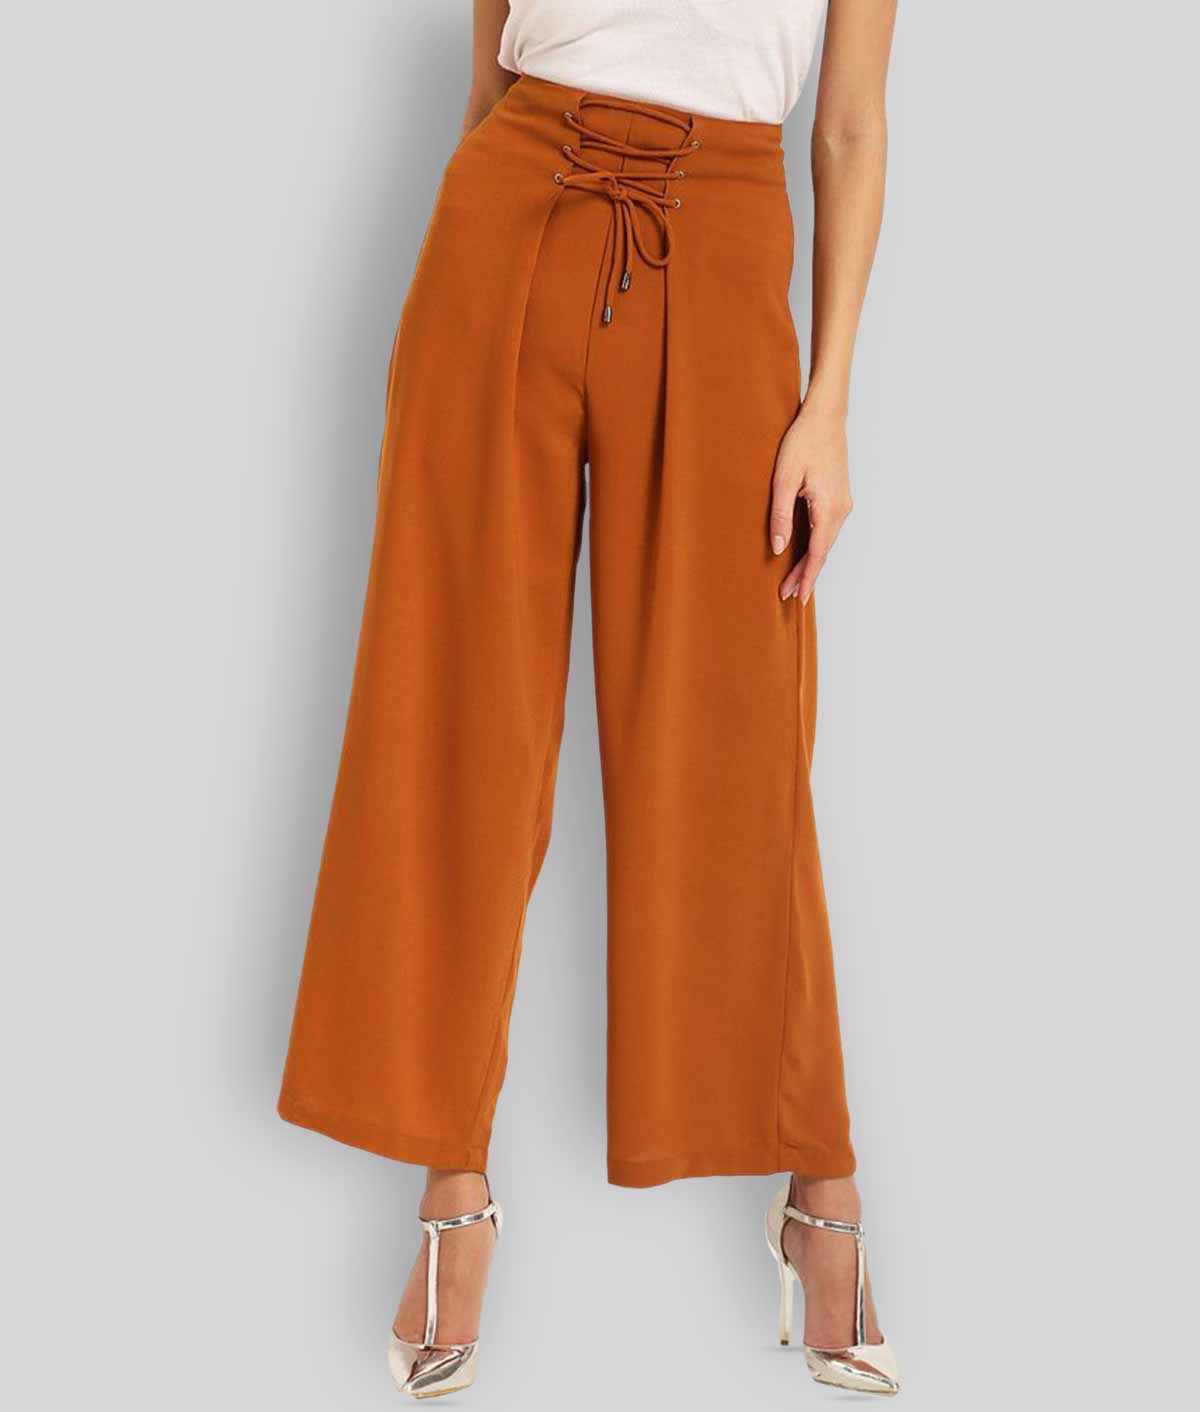 Rare - Orange Polyester Regular Fit Women's Casual Pants  ( Pack of 1 )